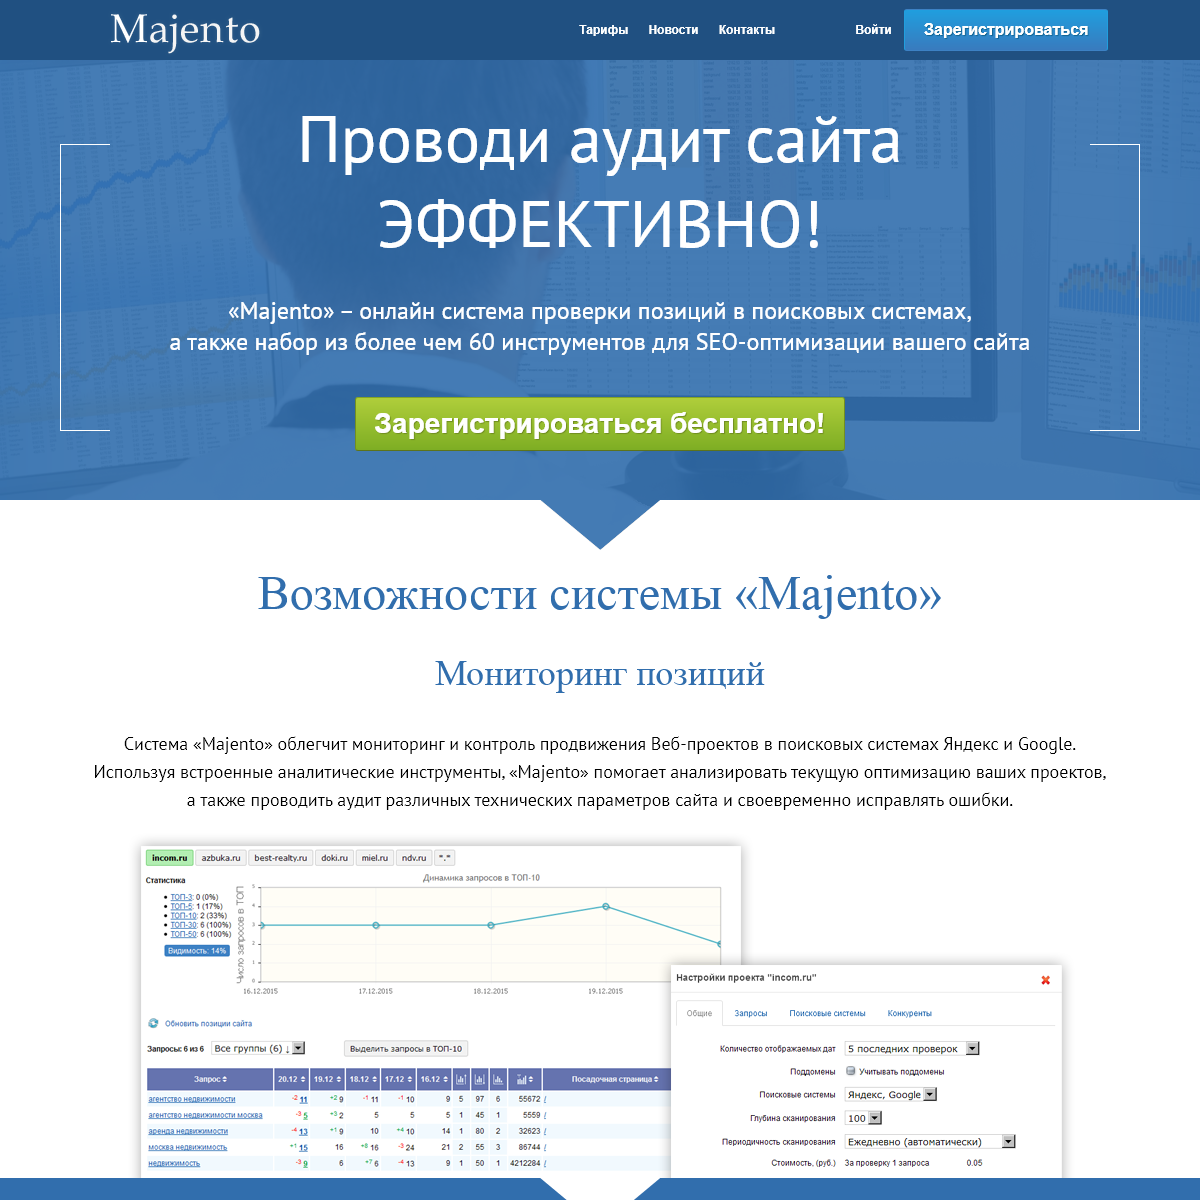 A complete backup of majento.ru